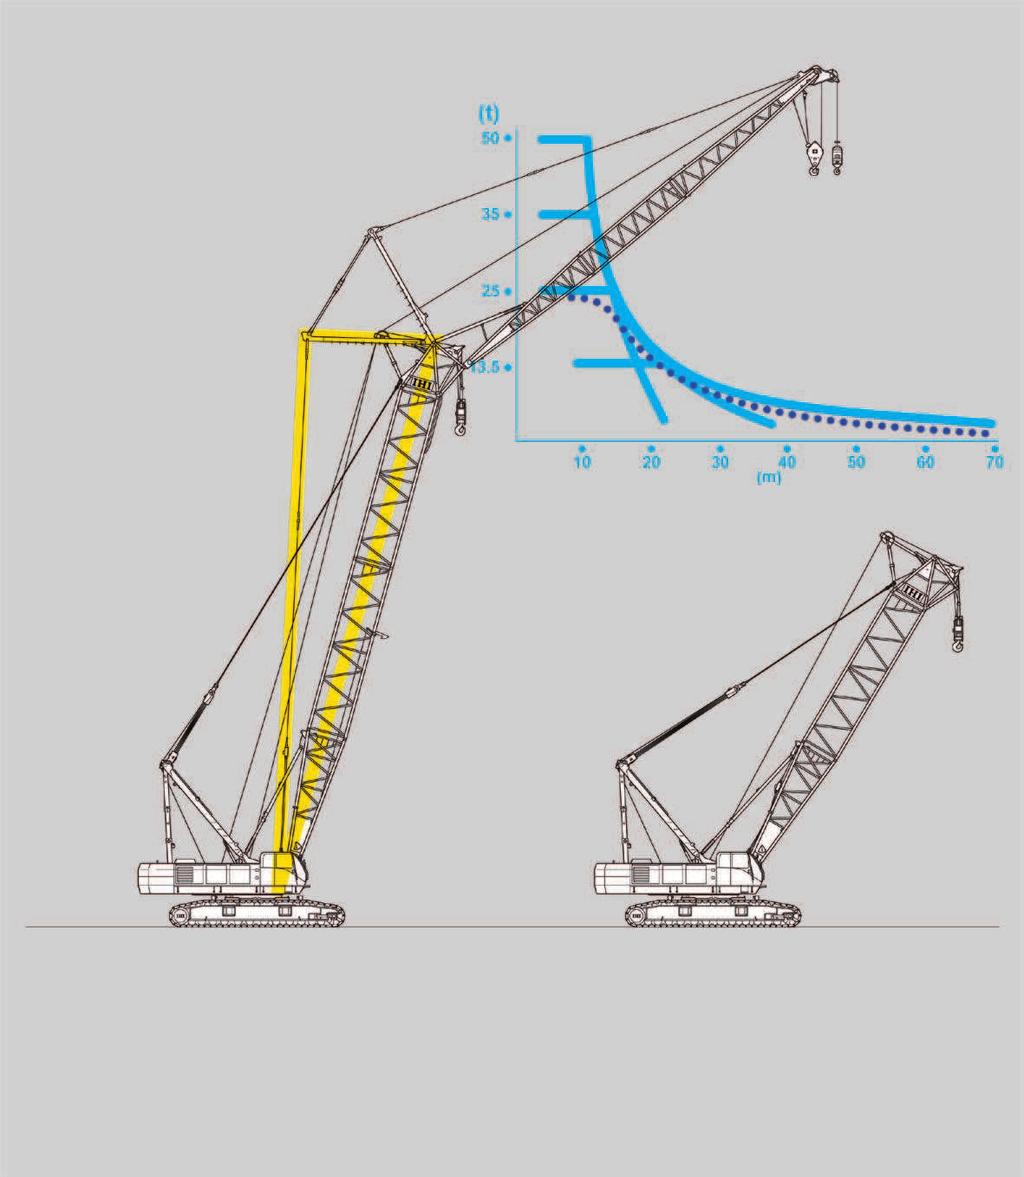 Luffing J ib Cra ne evolve d t o e quip Aux ilia r y J ib Luffing Jib Crane Conventional luffing tower crane Post Crane Selections are aveilable from: ) 50-ton lifting with Post ) 5-ton lifting with